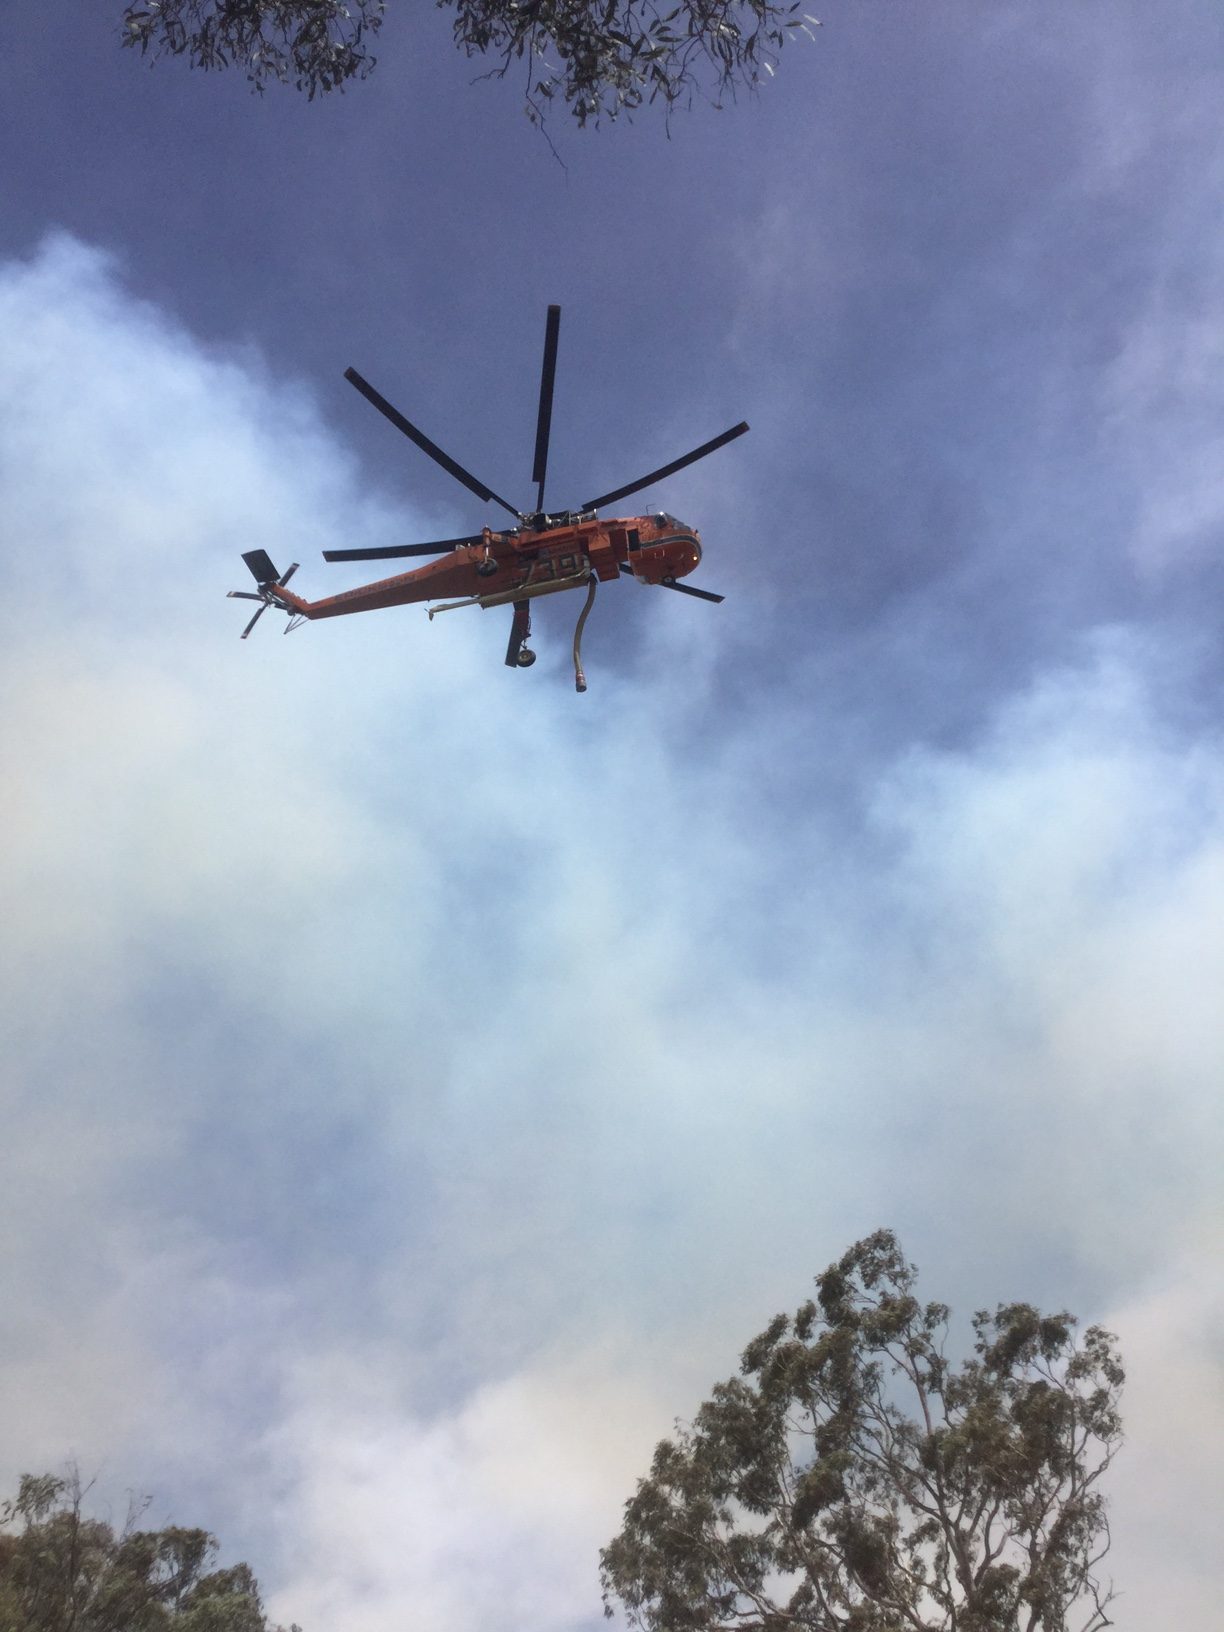 Good Good Fire, skycrane helicopter in flight